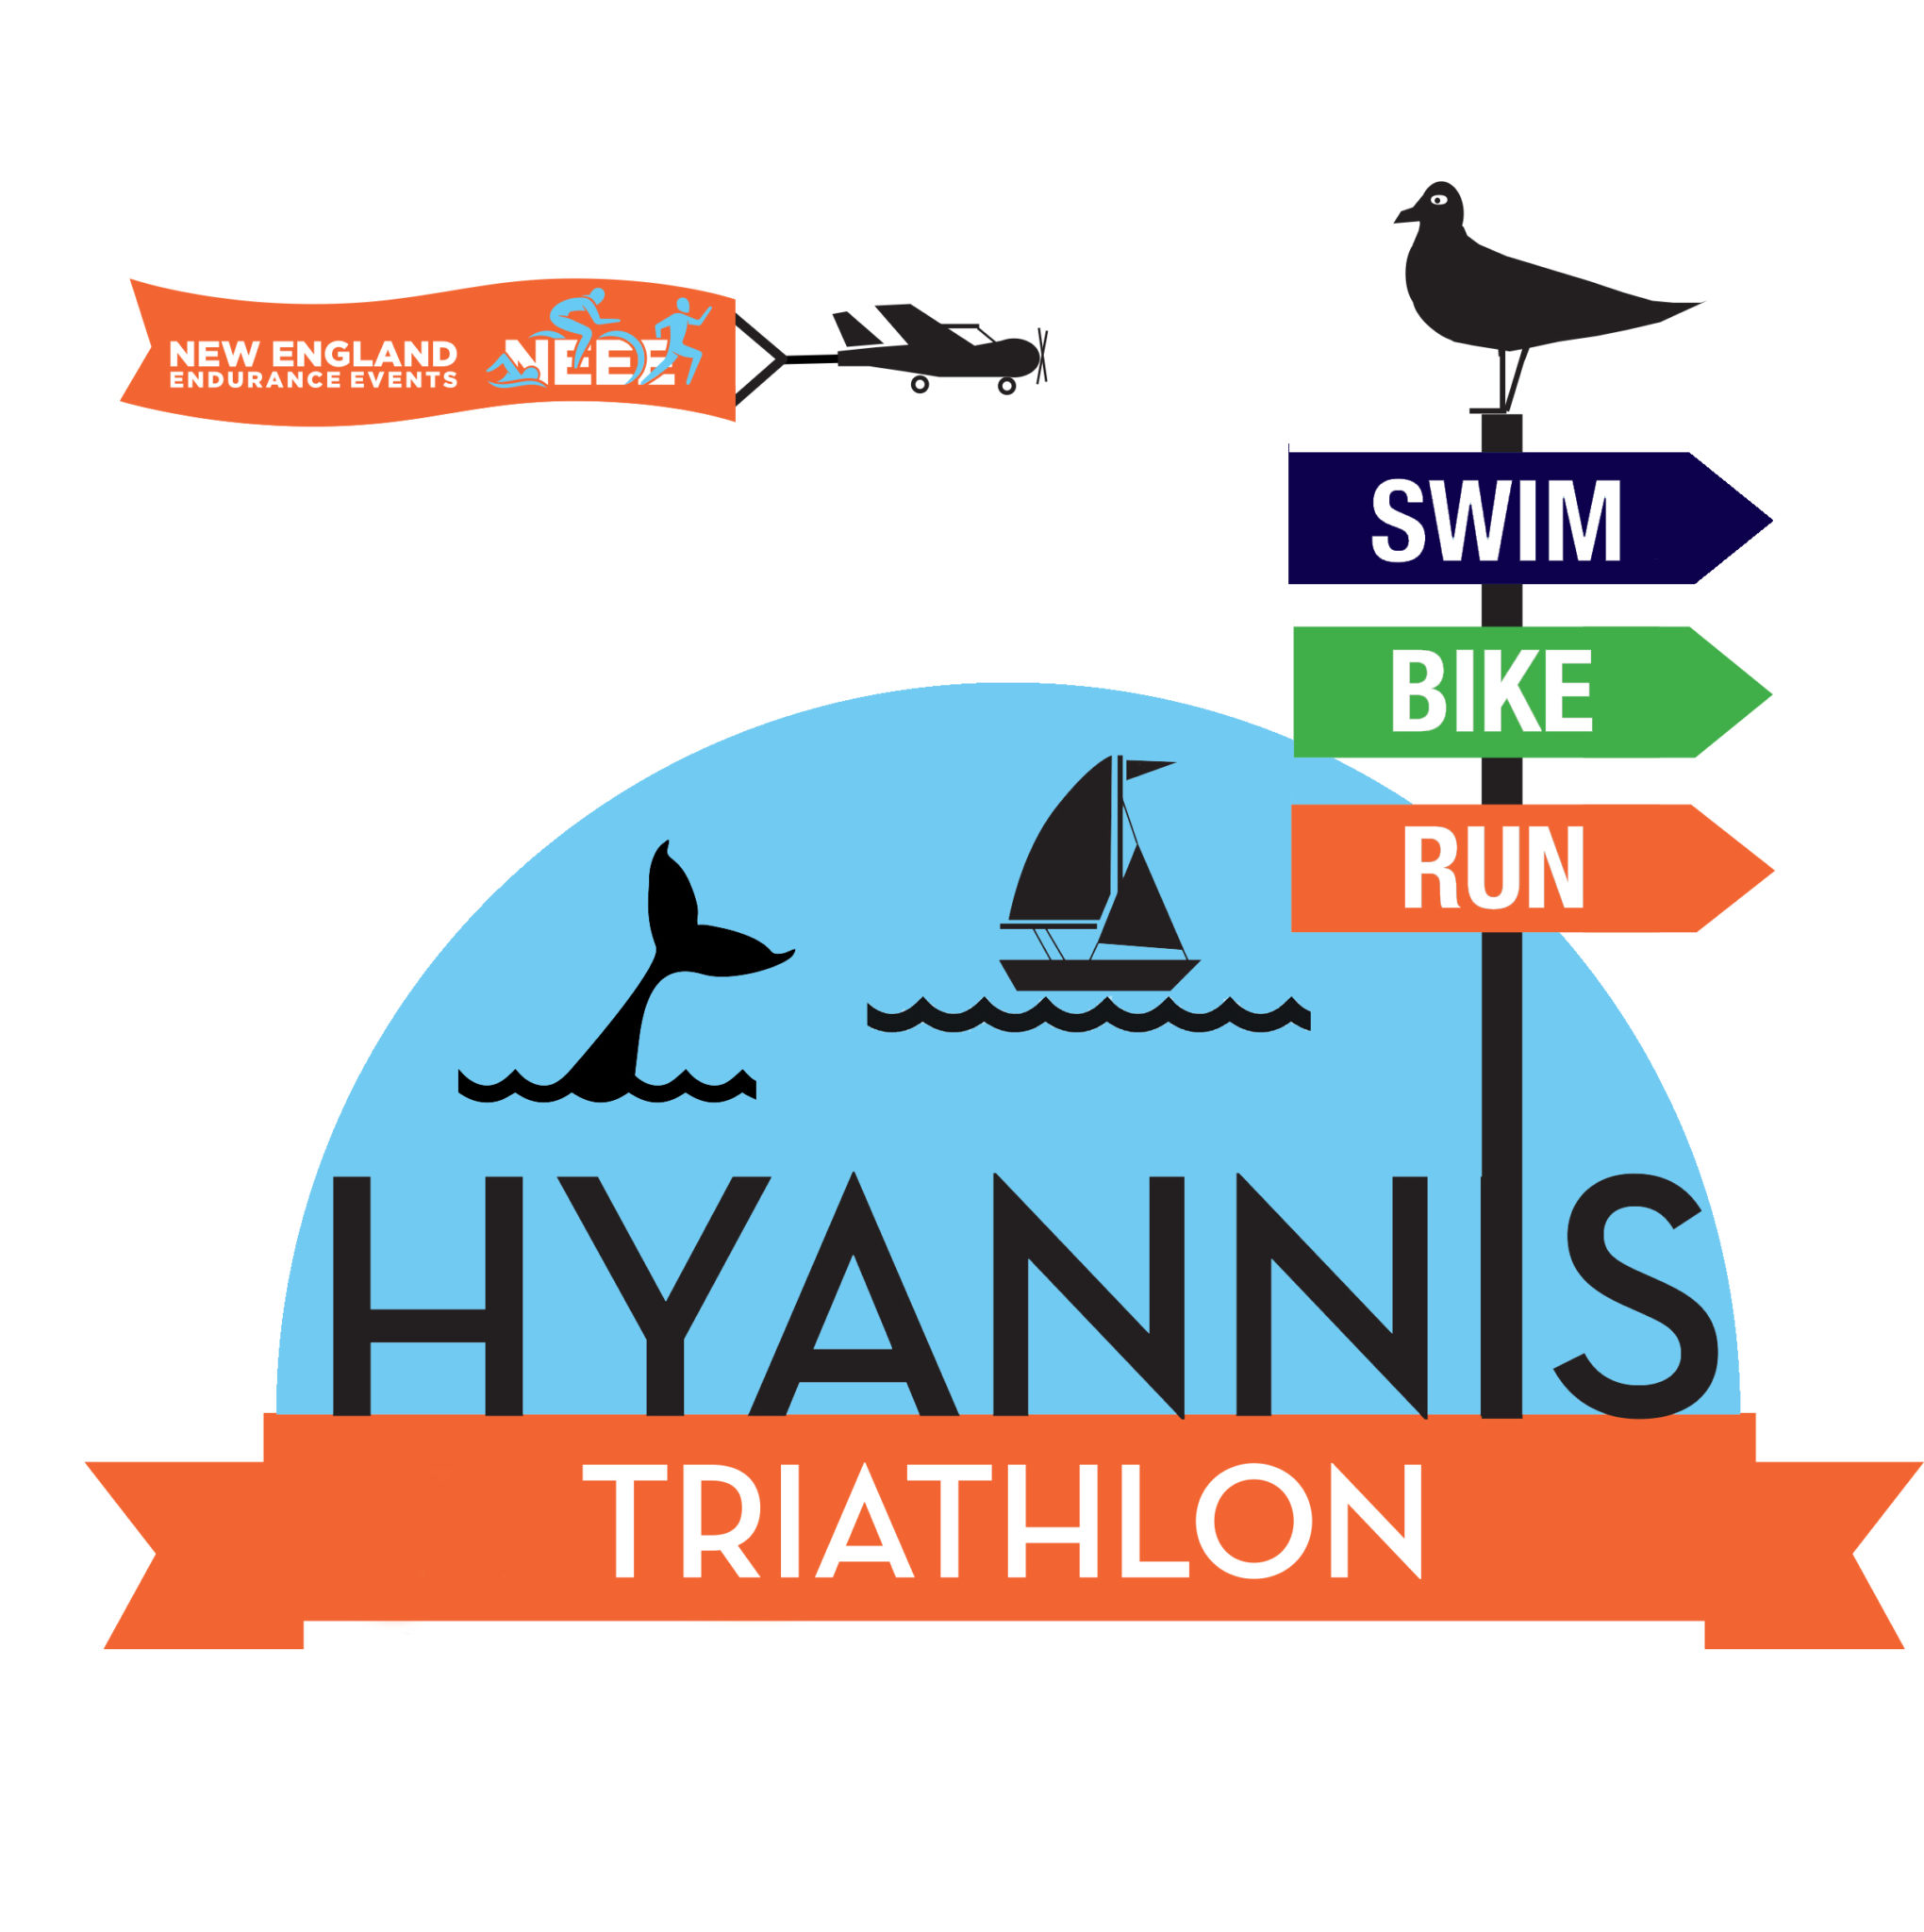 Hyannis 1 Triathlon logo on RaceRaves